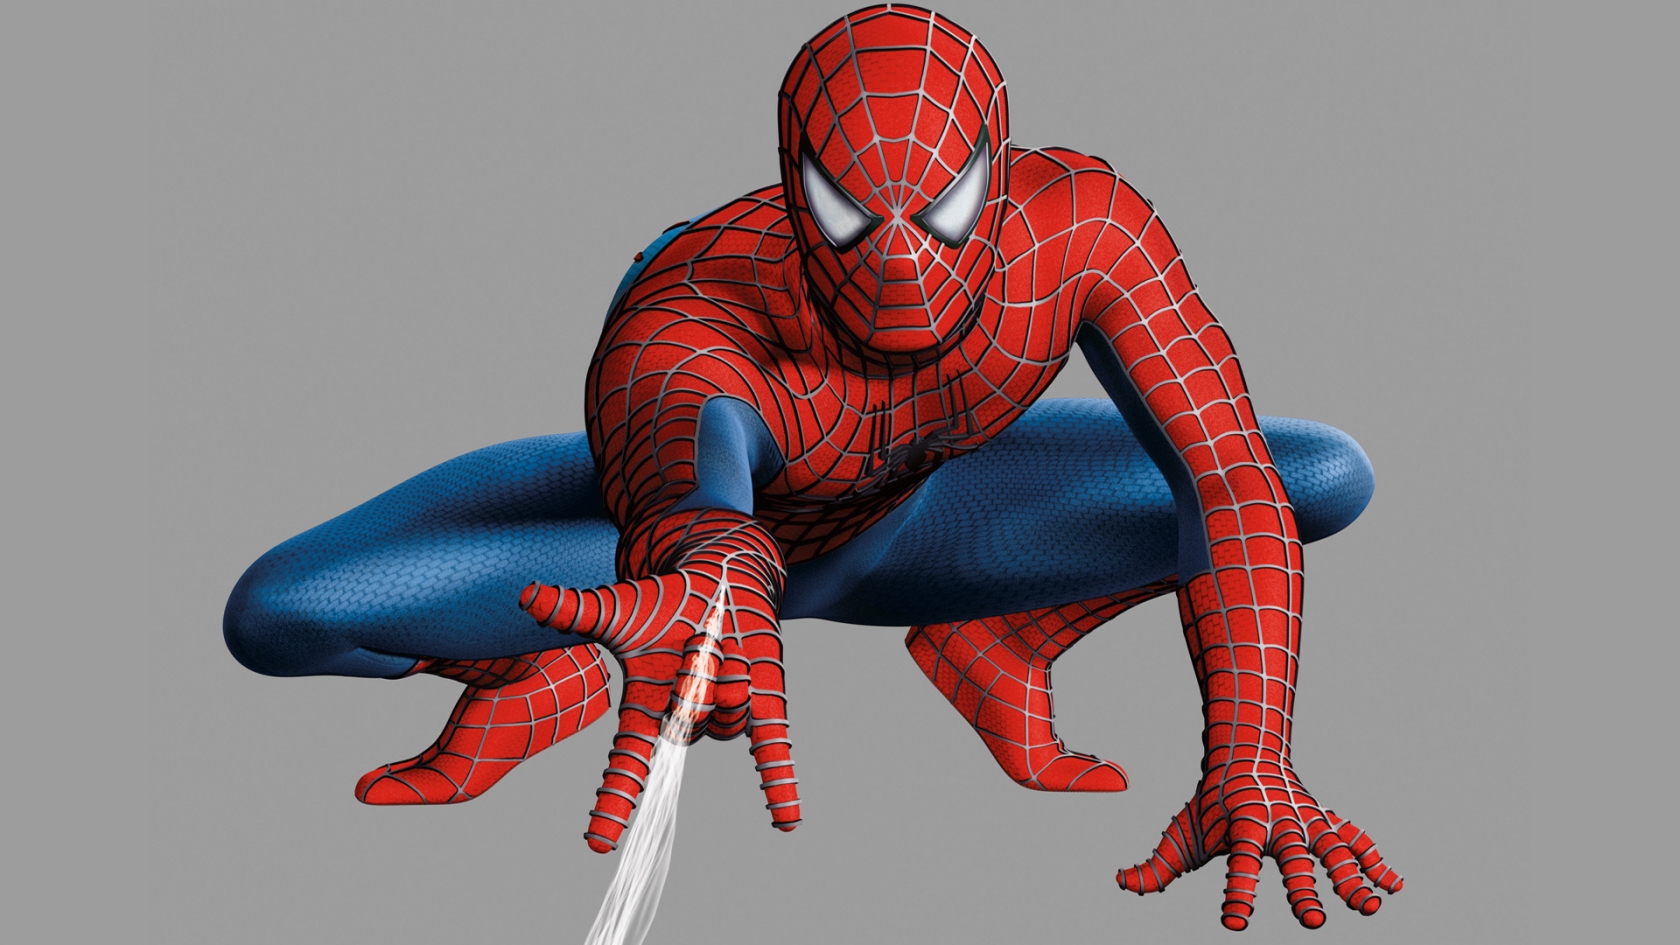 Spiderman 4 for 1680 x 945 HDTV resolution